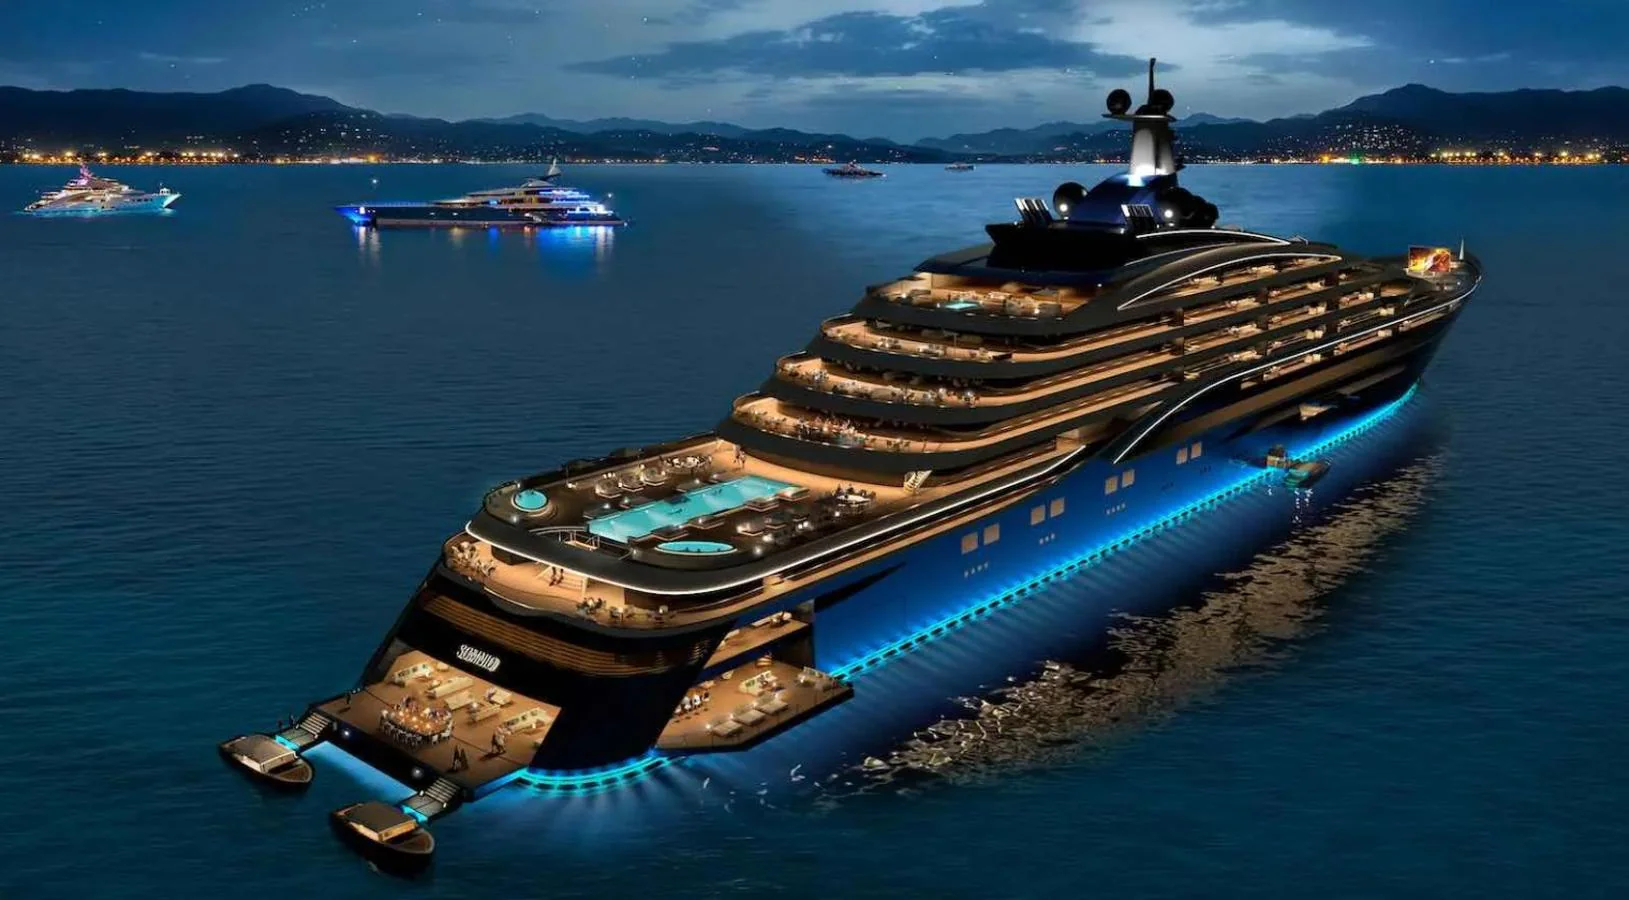 600 million dollar super yacht